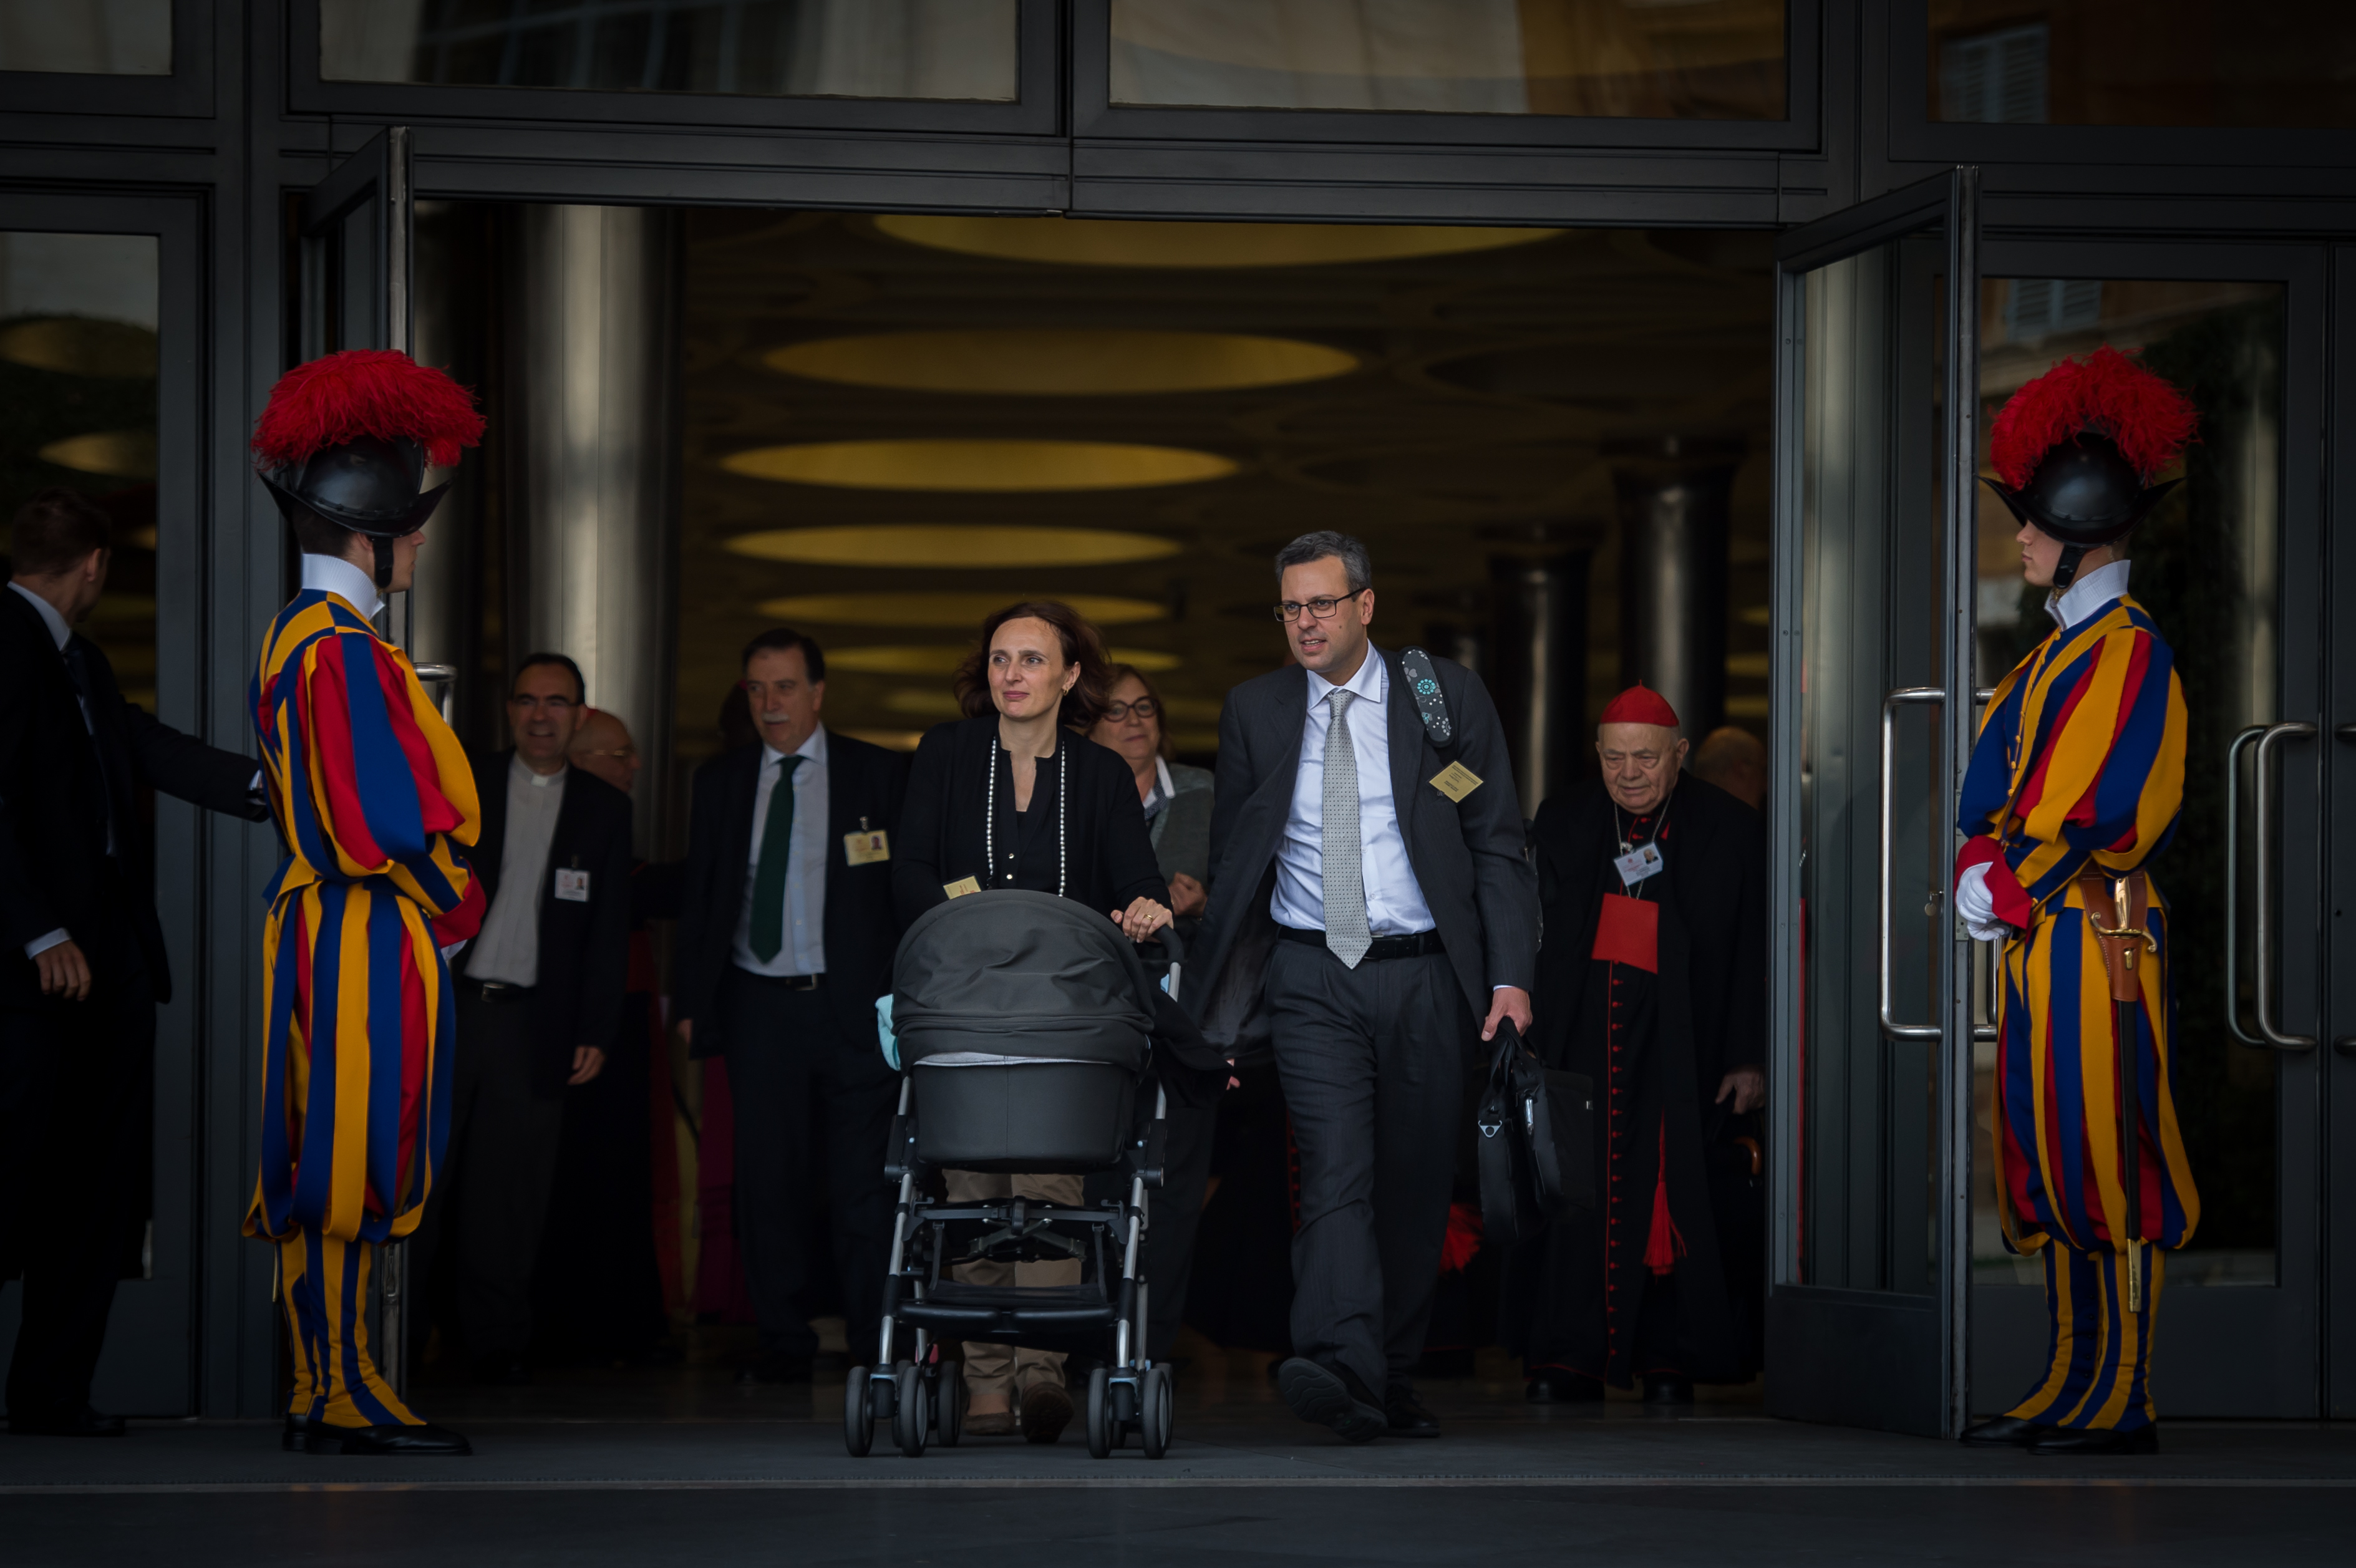 Patricia and Massimo enter synod hall